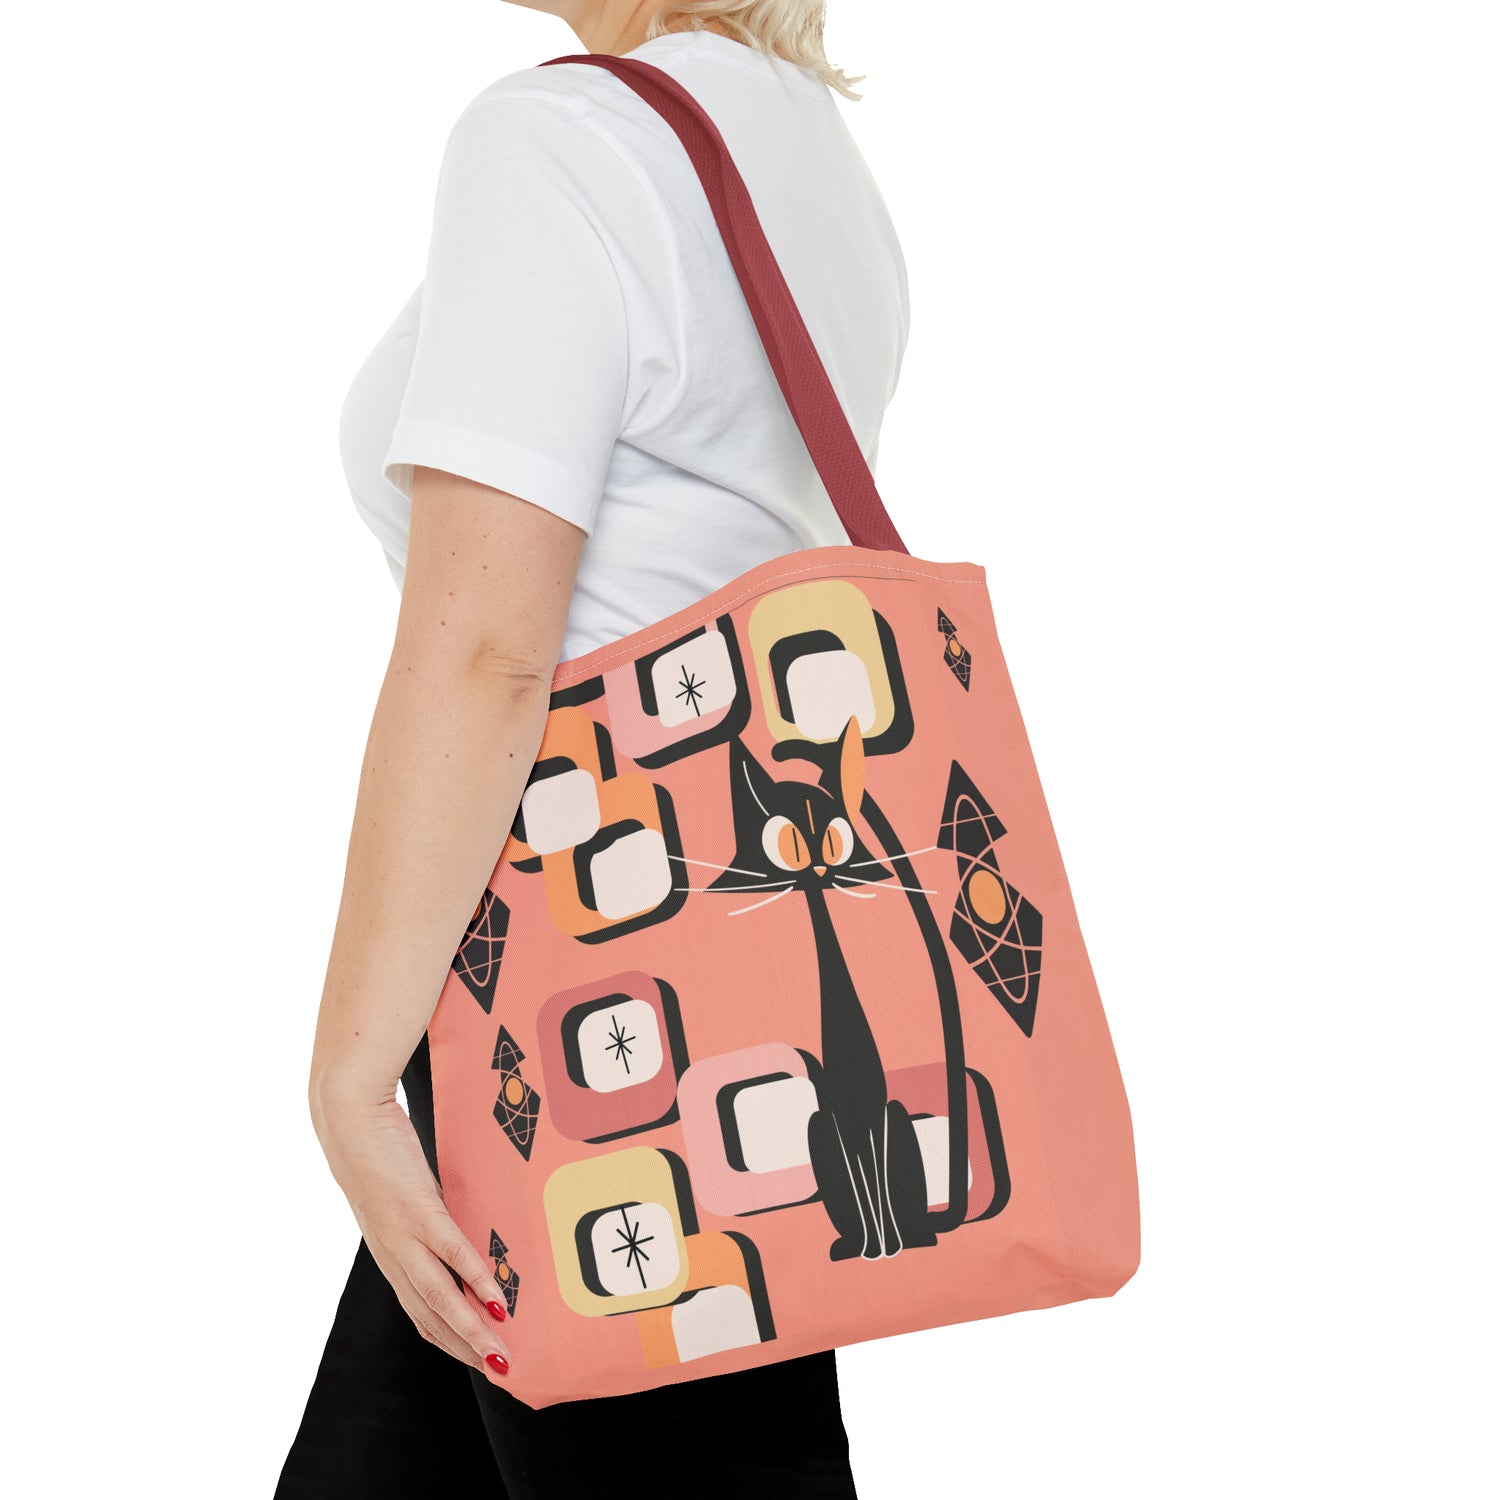 Atomic Cat Tote Bag, Coral Color, Mid Century Modern Geometric Designs, Mid Mod Retro Apparel